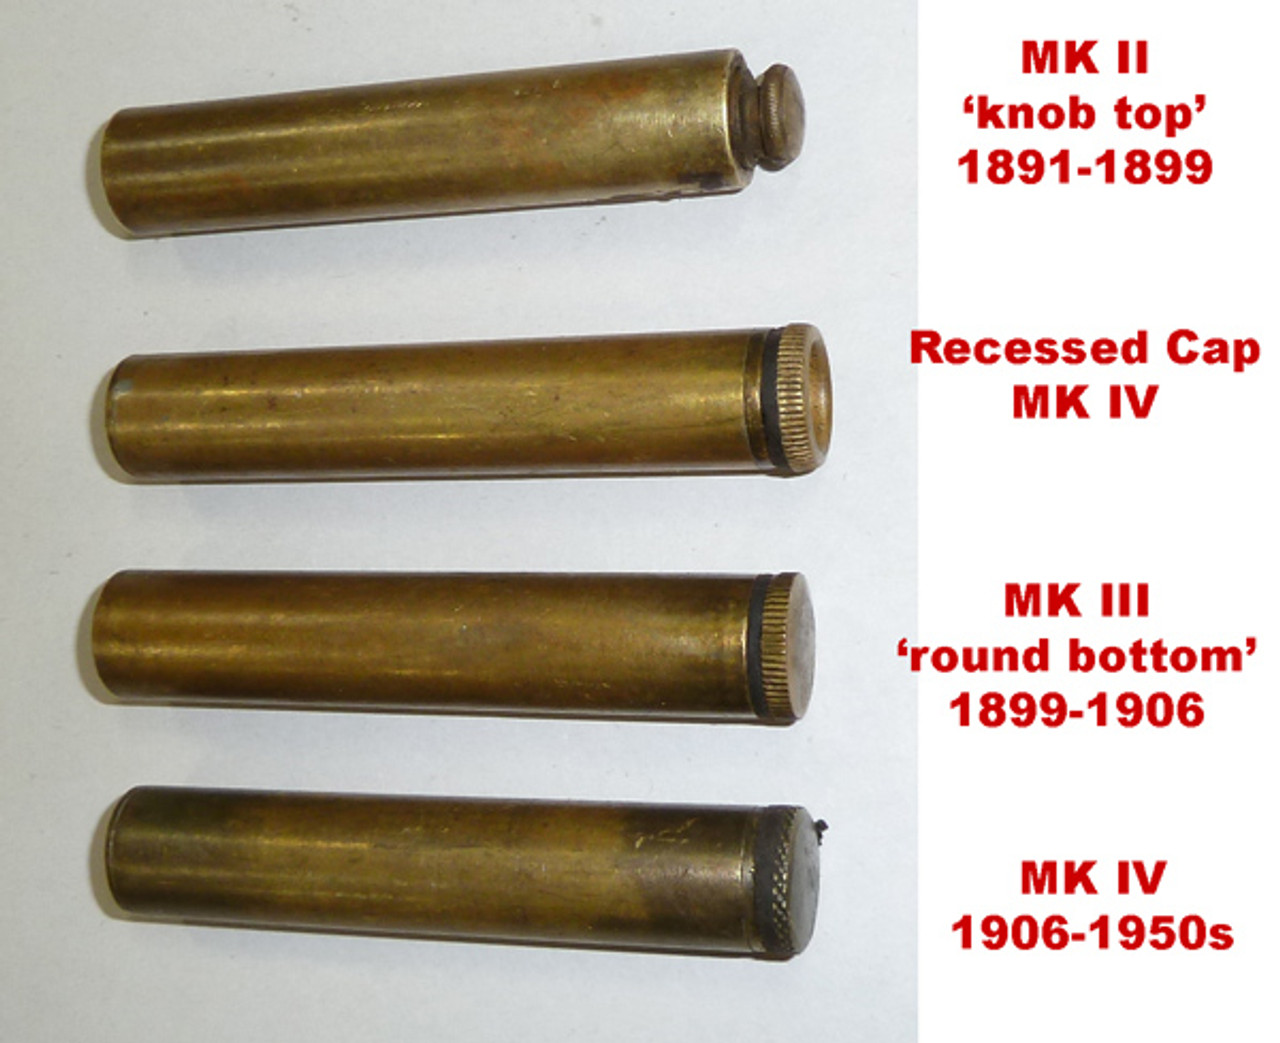 SMLE MK II  Brass  Oiler (knob top) - Unnumbered